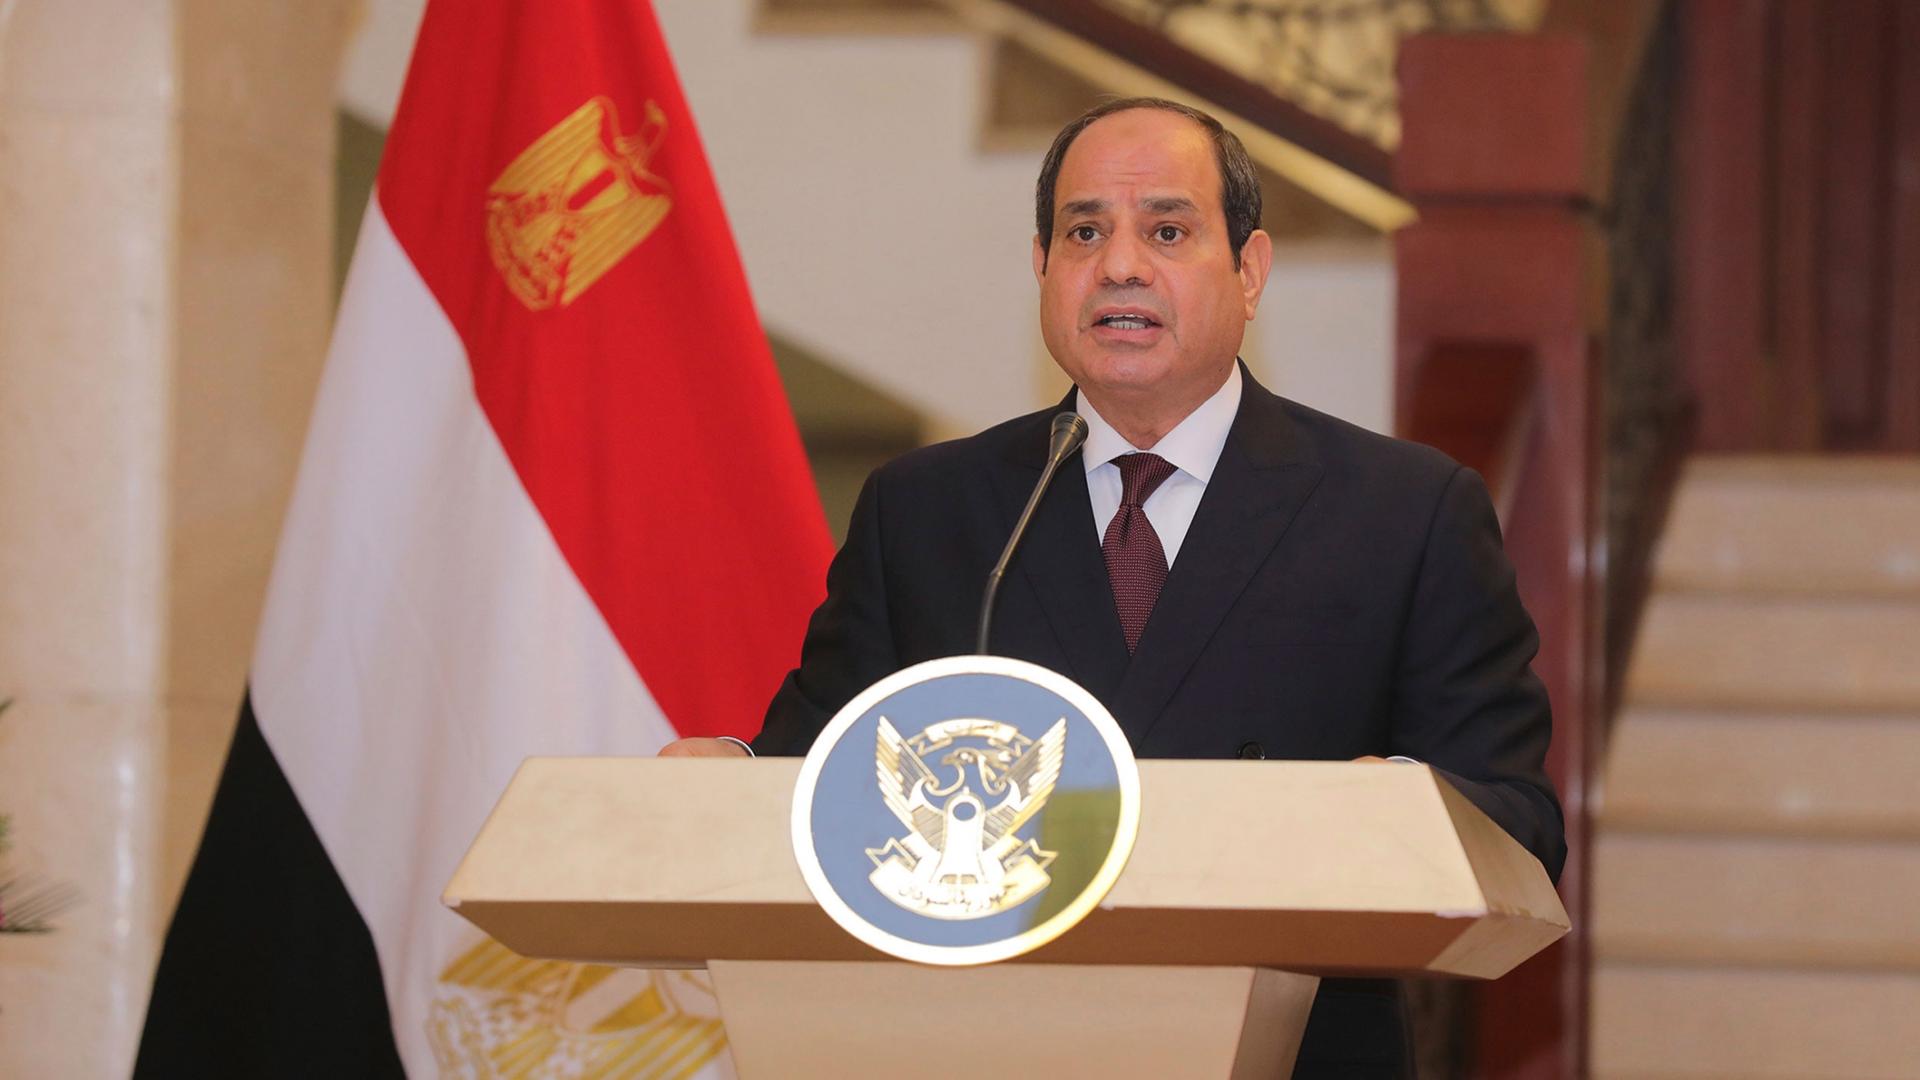 President Abdul Fattah al-Sisi at a podium with an Egyptian flag behind him